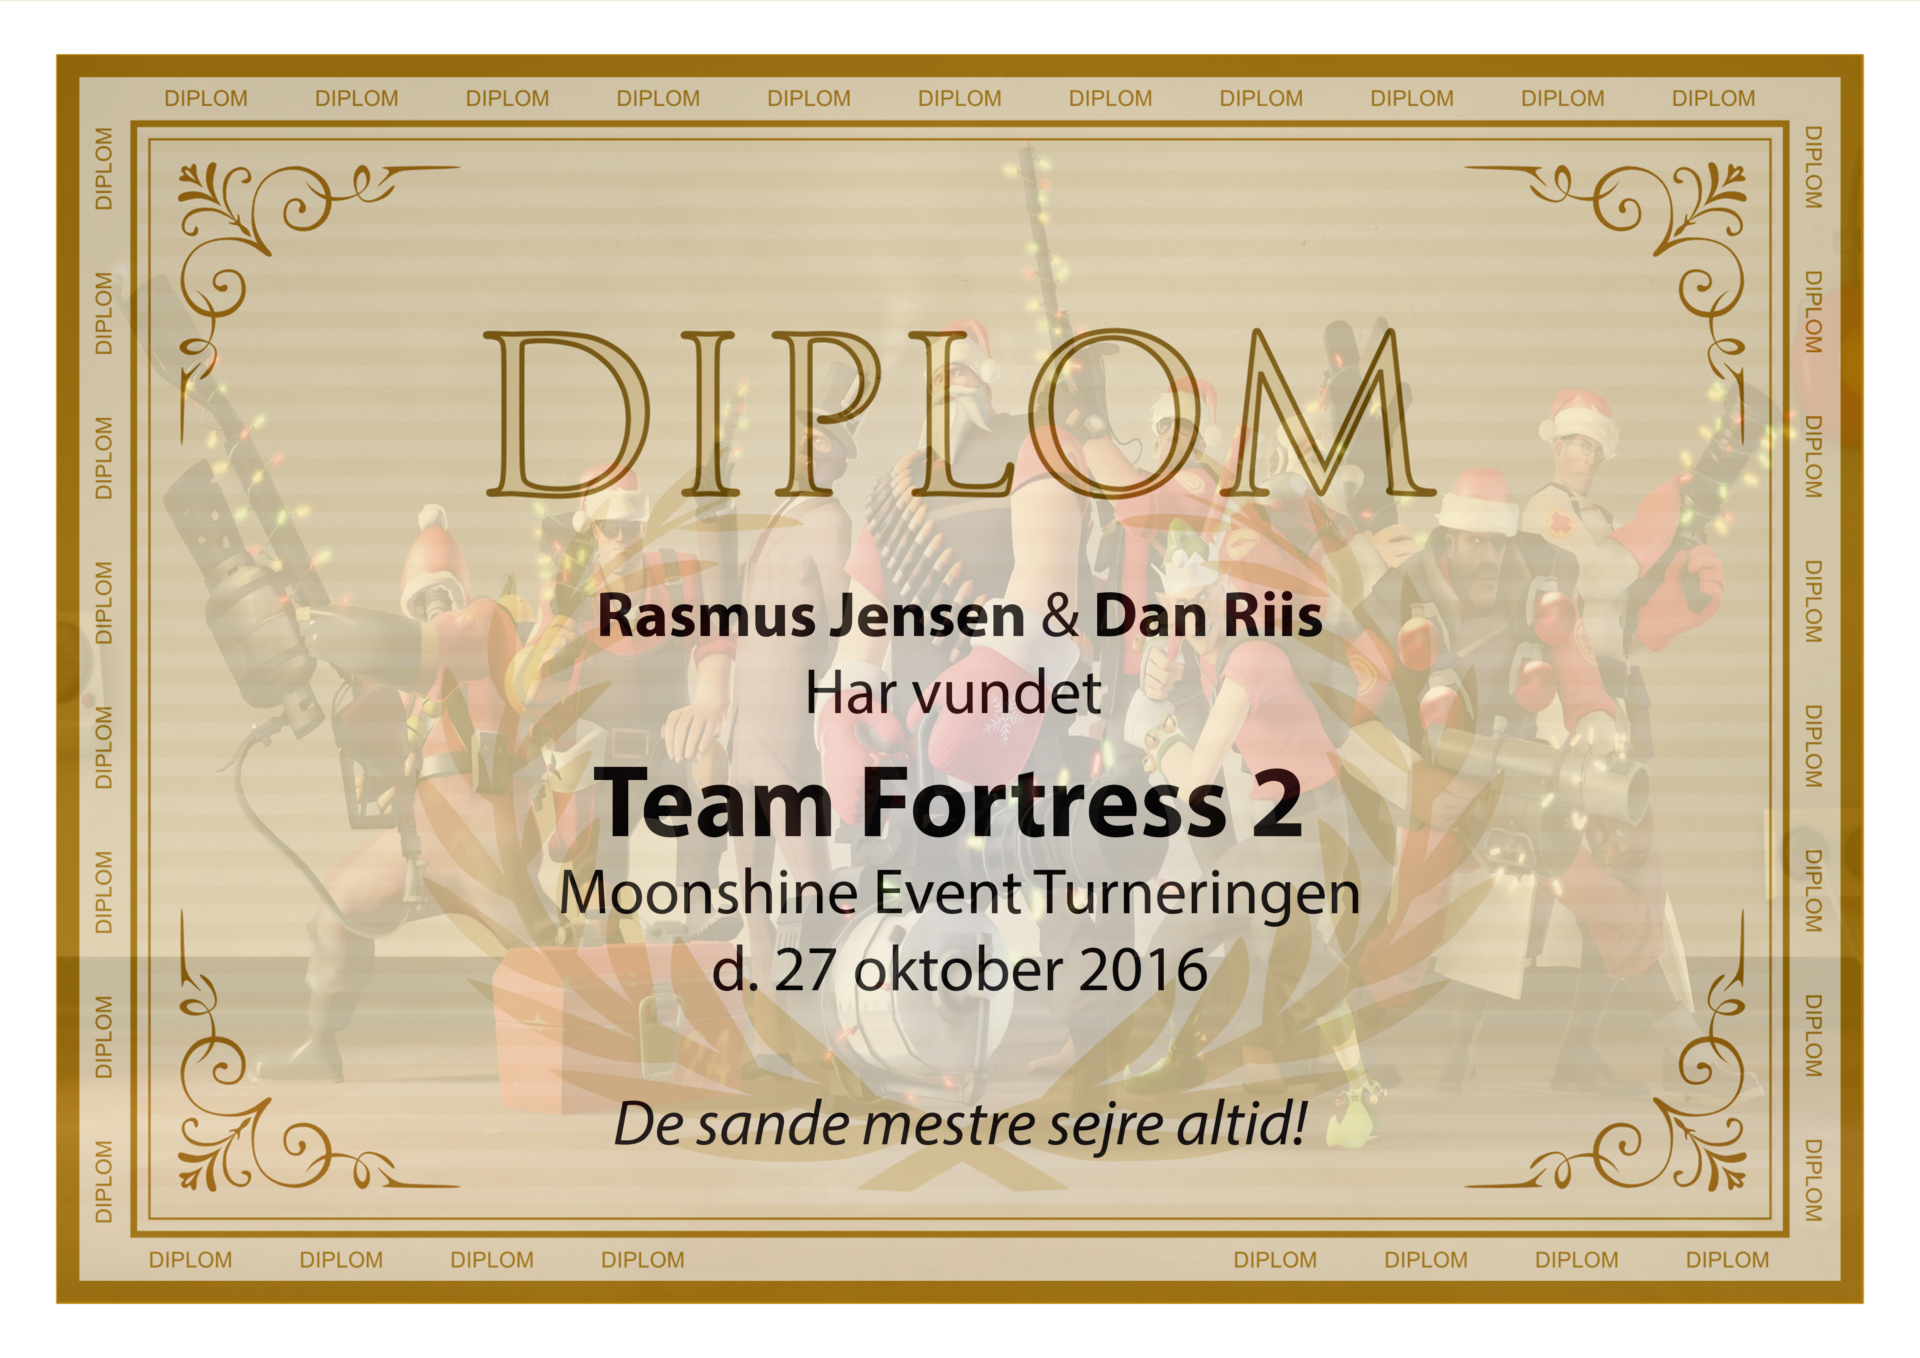 Vinderne er Rasmus Jensen & Dan Riis